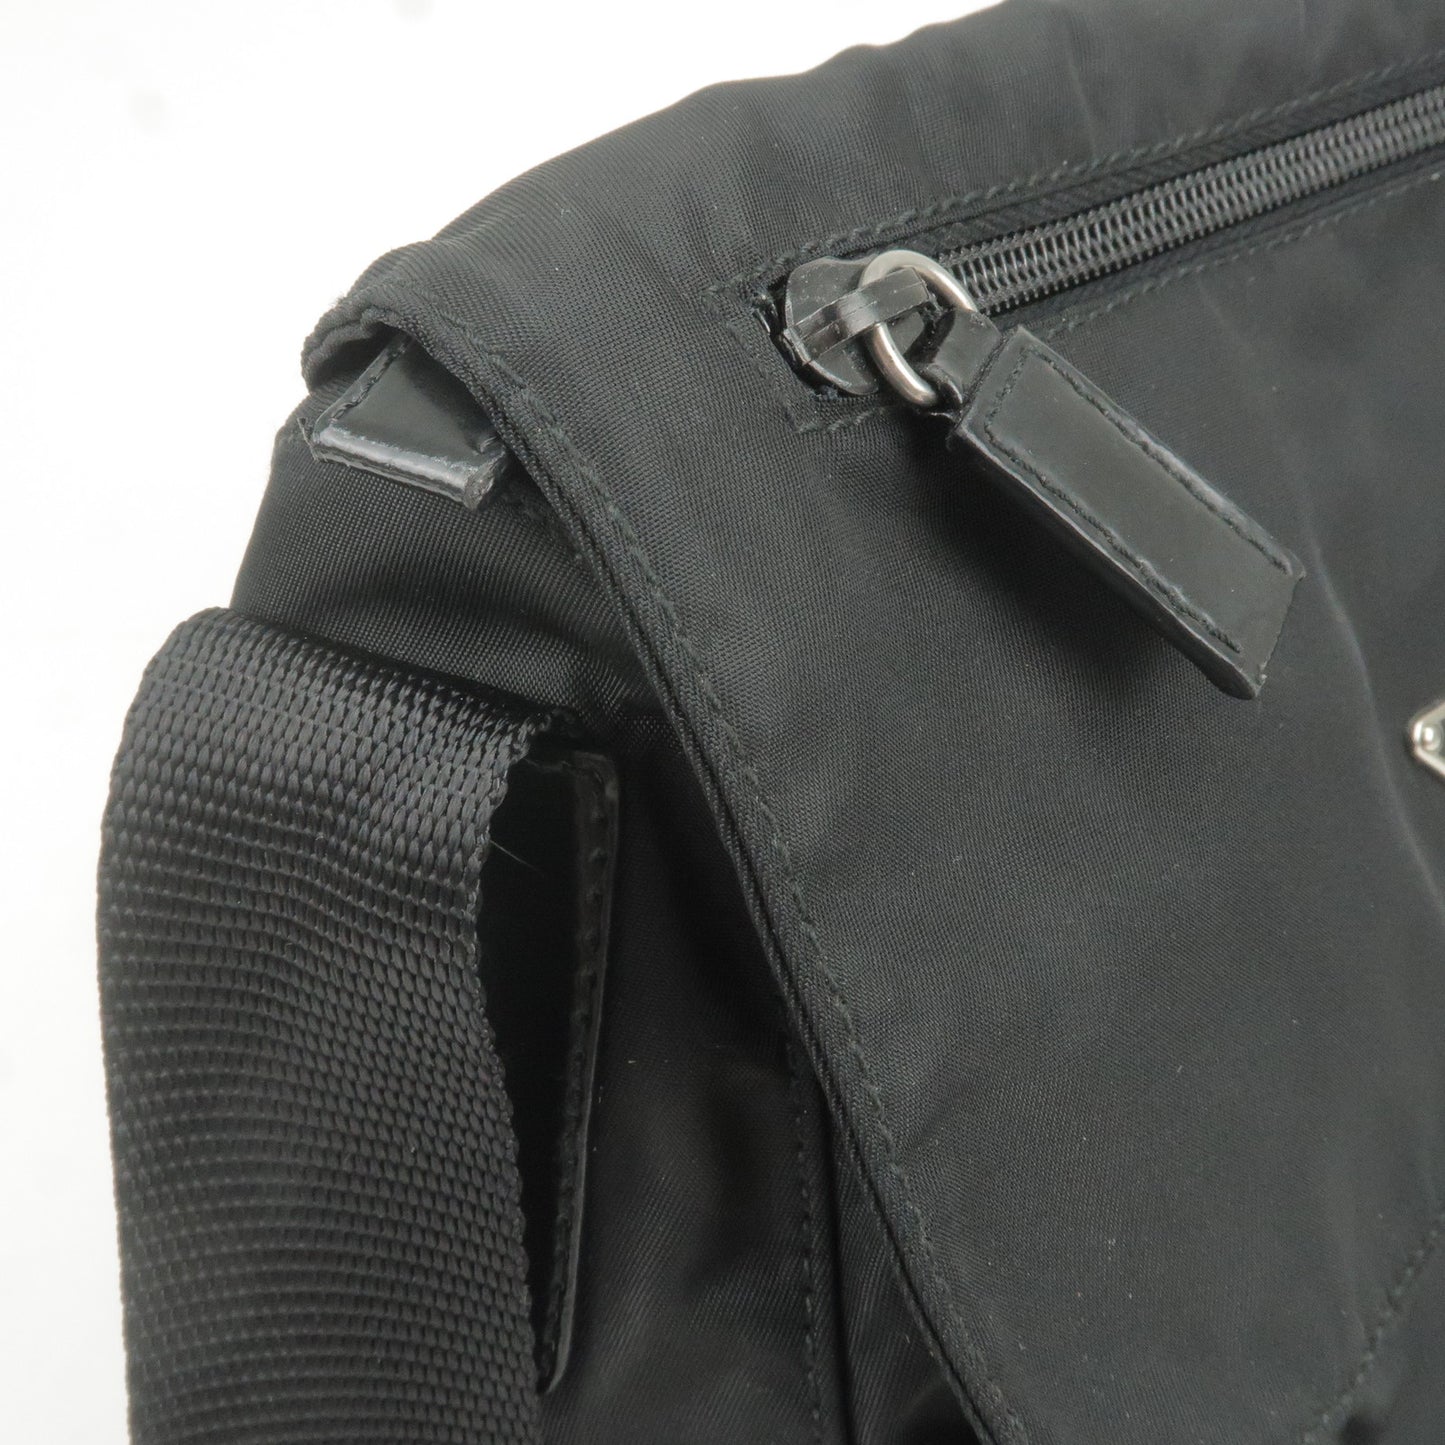 PRADA Logo Nylon Leather Shoulder Bag Purse Bag NERO Black